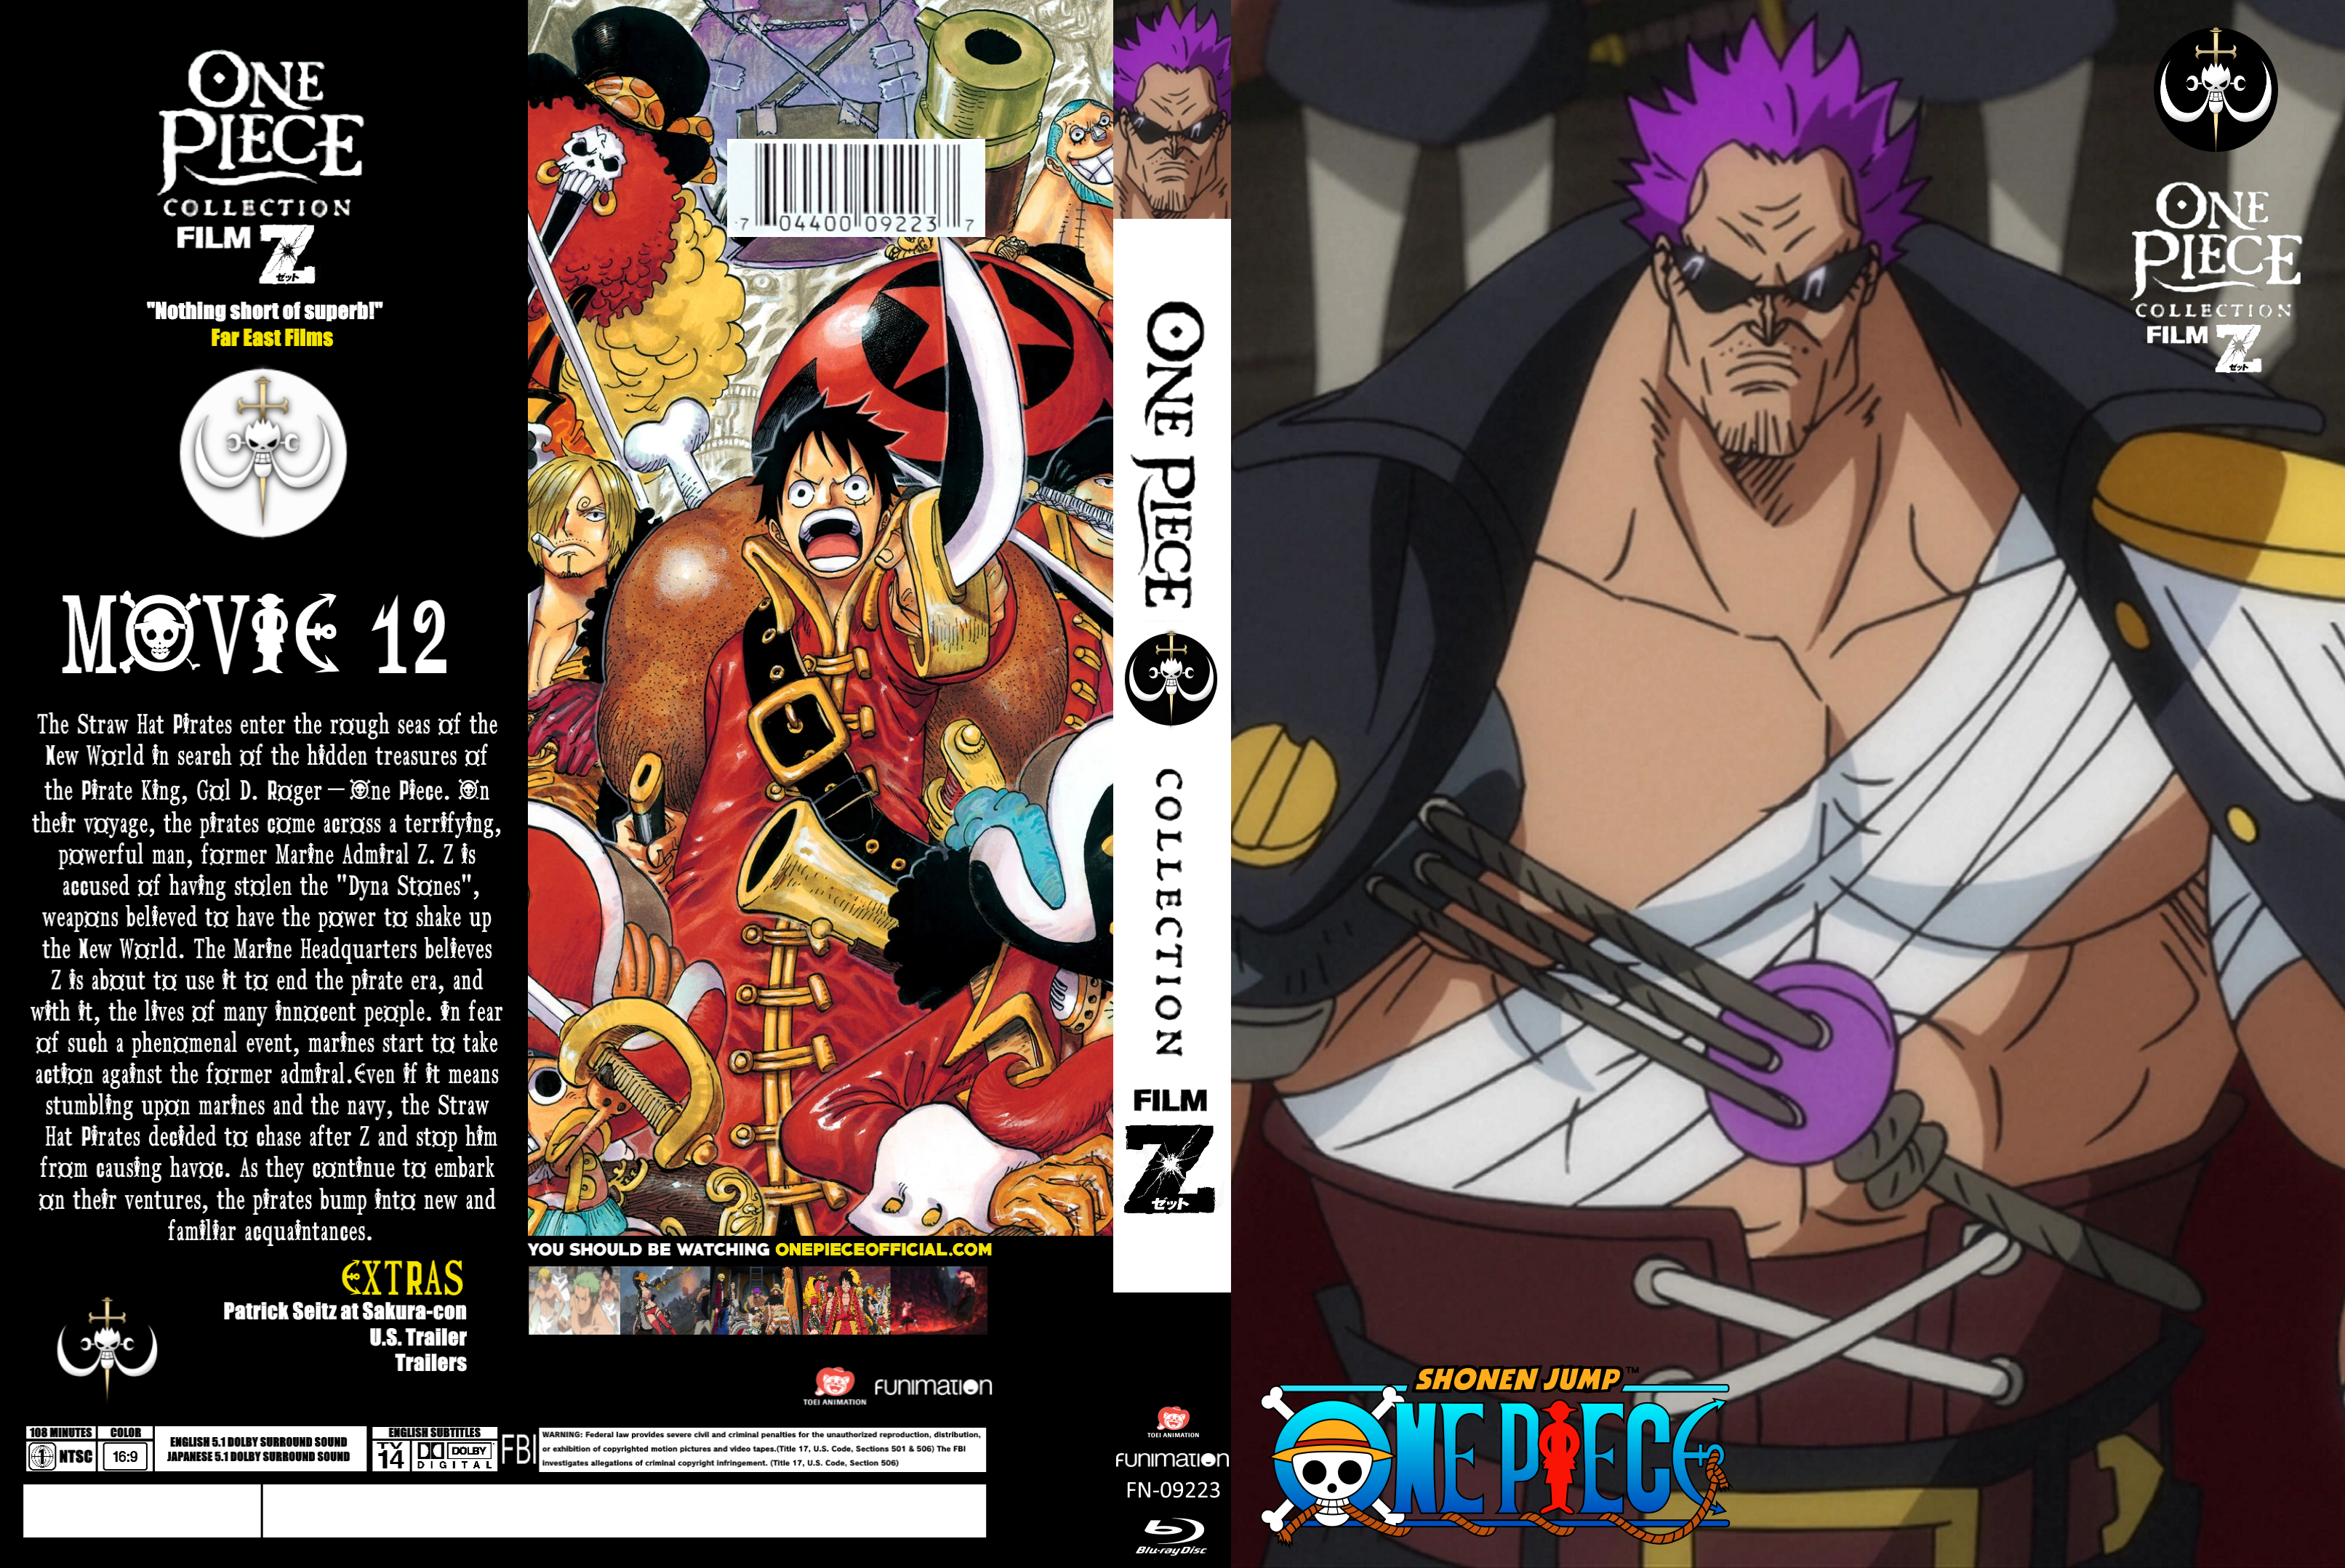 One Piece Film Z (movie 12) - Anime News Network